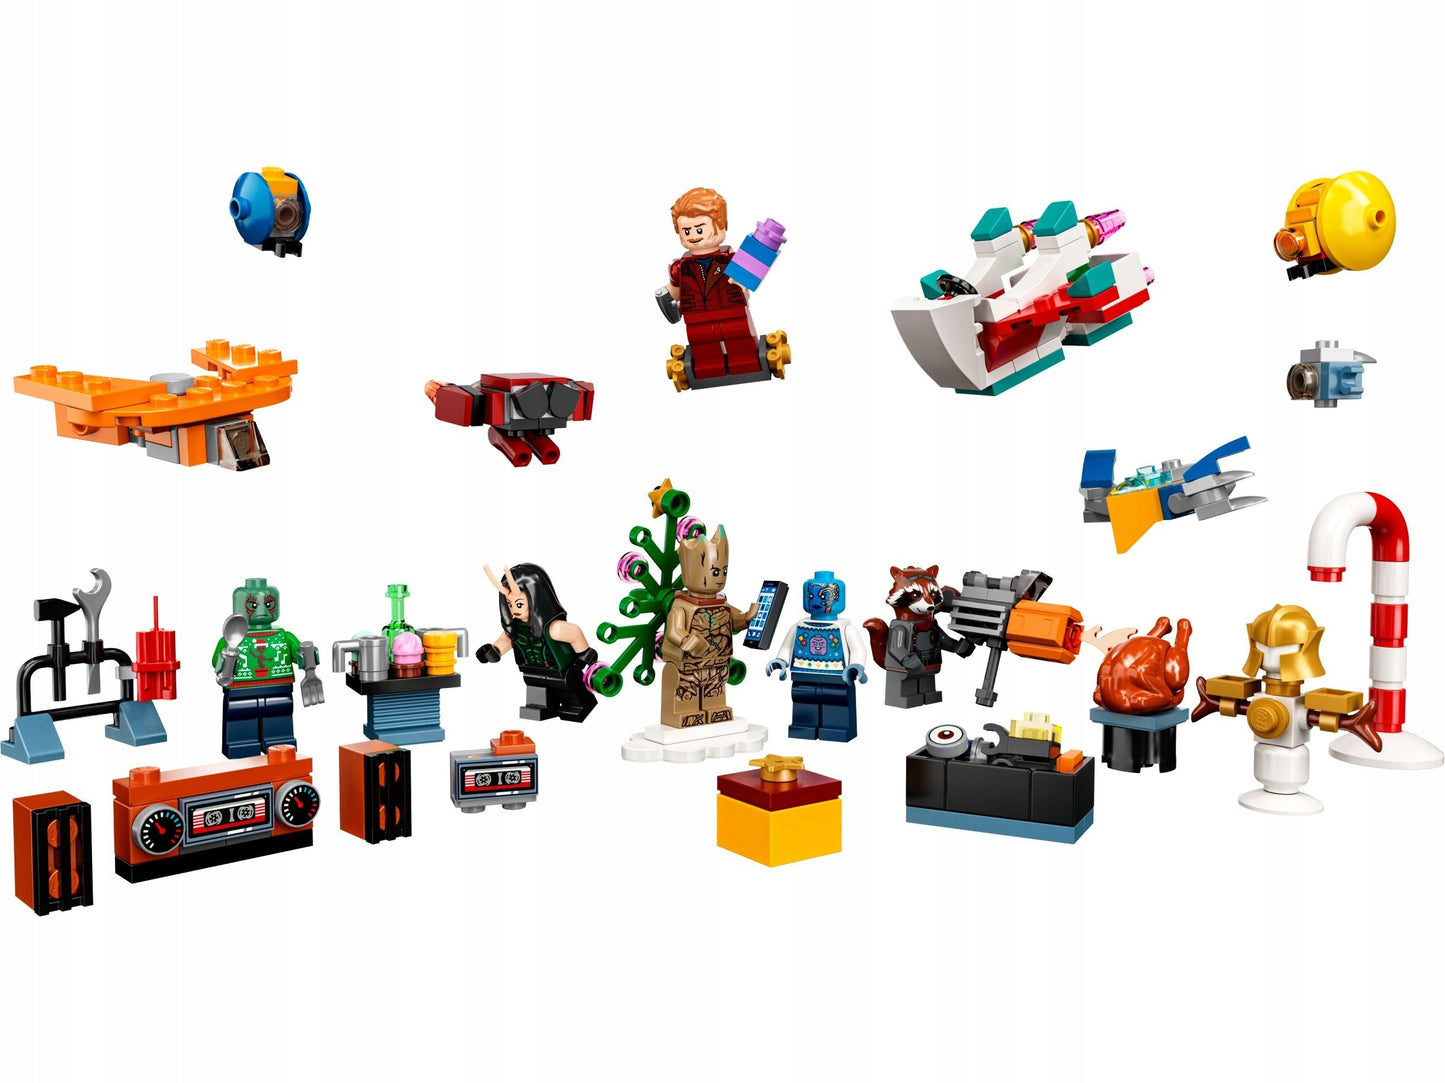 LEGO Super Heroes Advento kalendorius - 76231